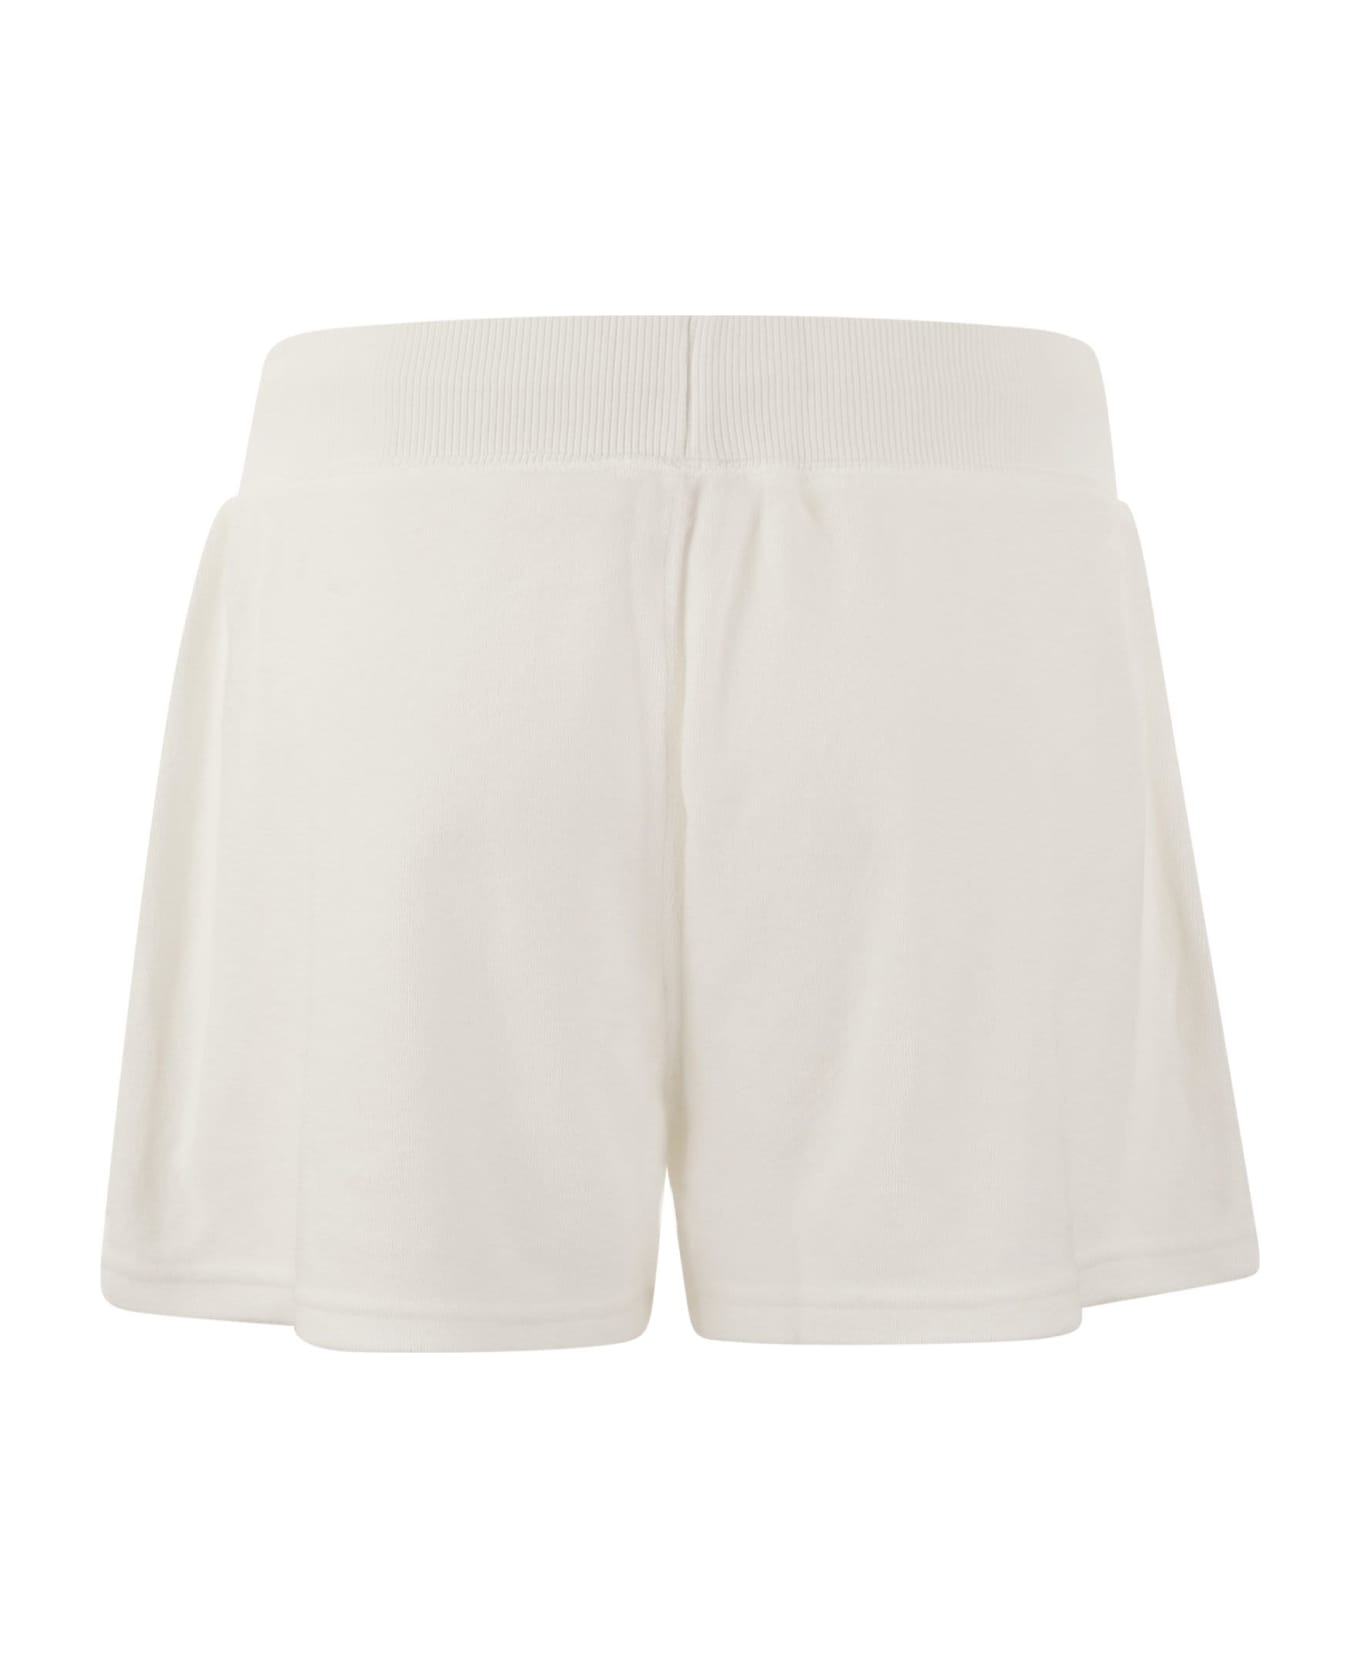 Polo Ralph Lauren Sponge Shorts With Drawstring - White